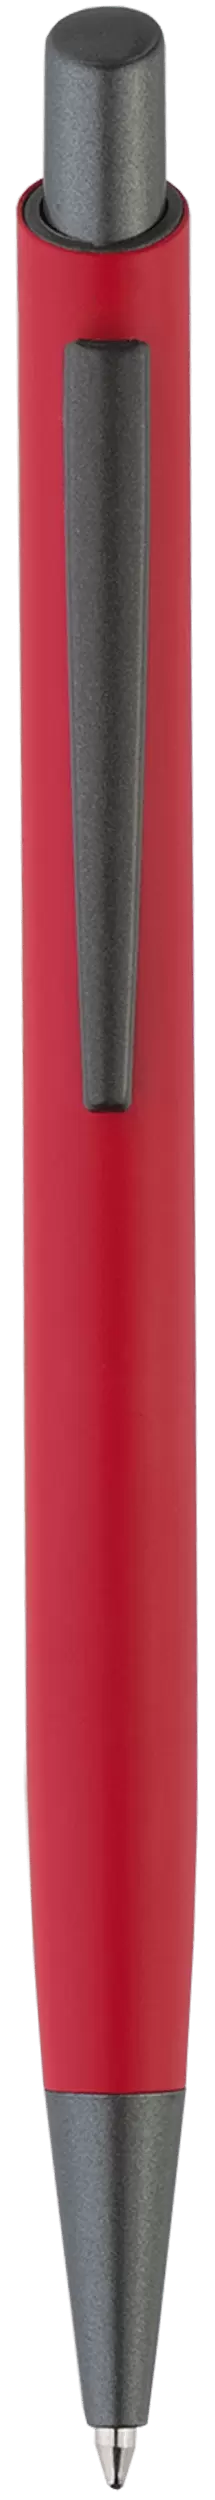 Ручка ELFARO TITAN Красная 3052.03